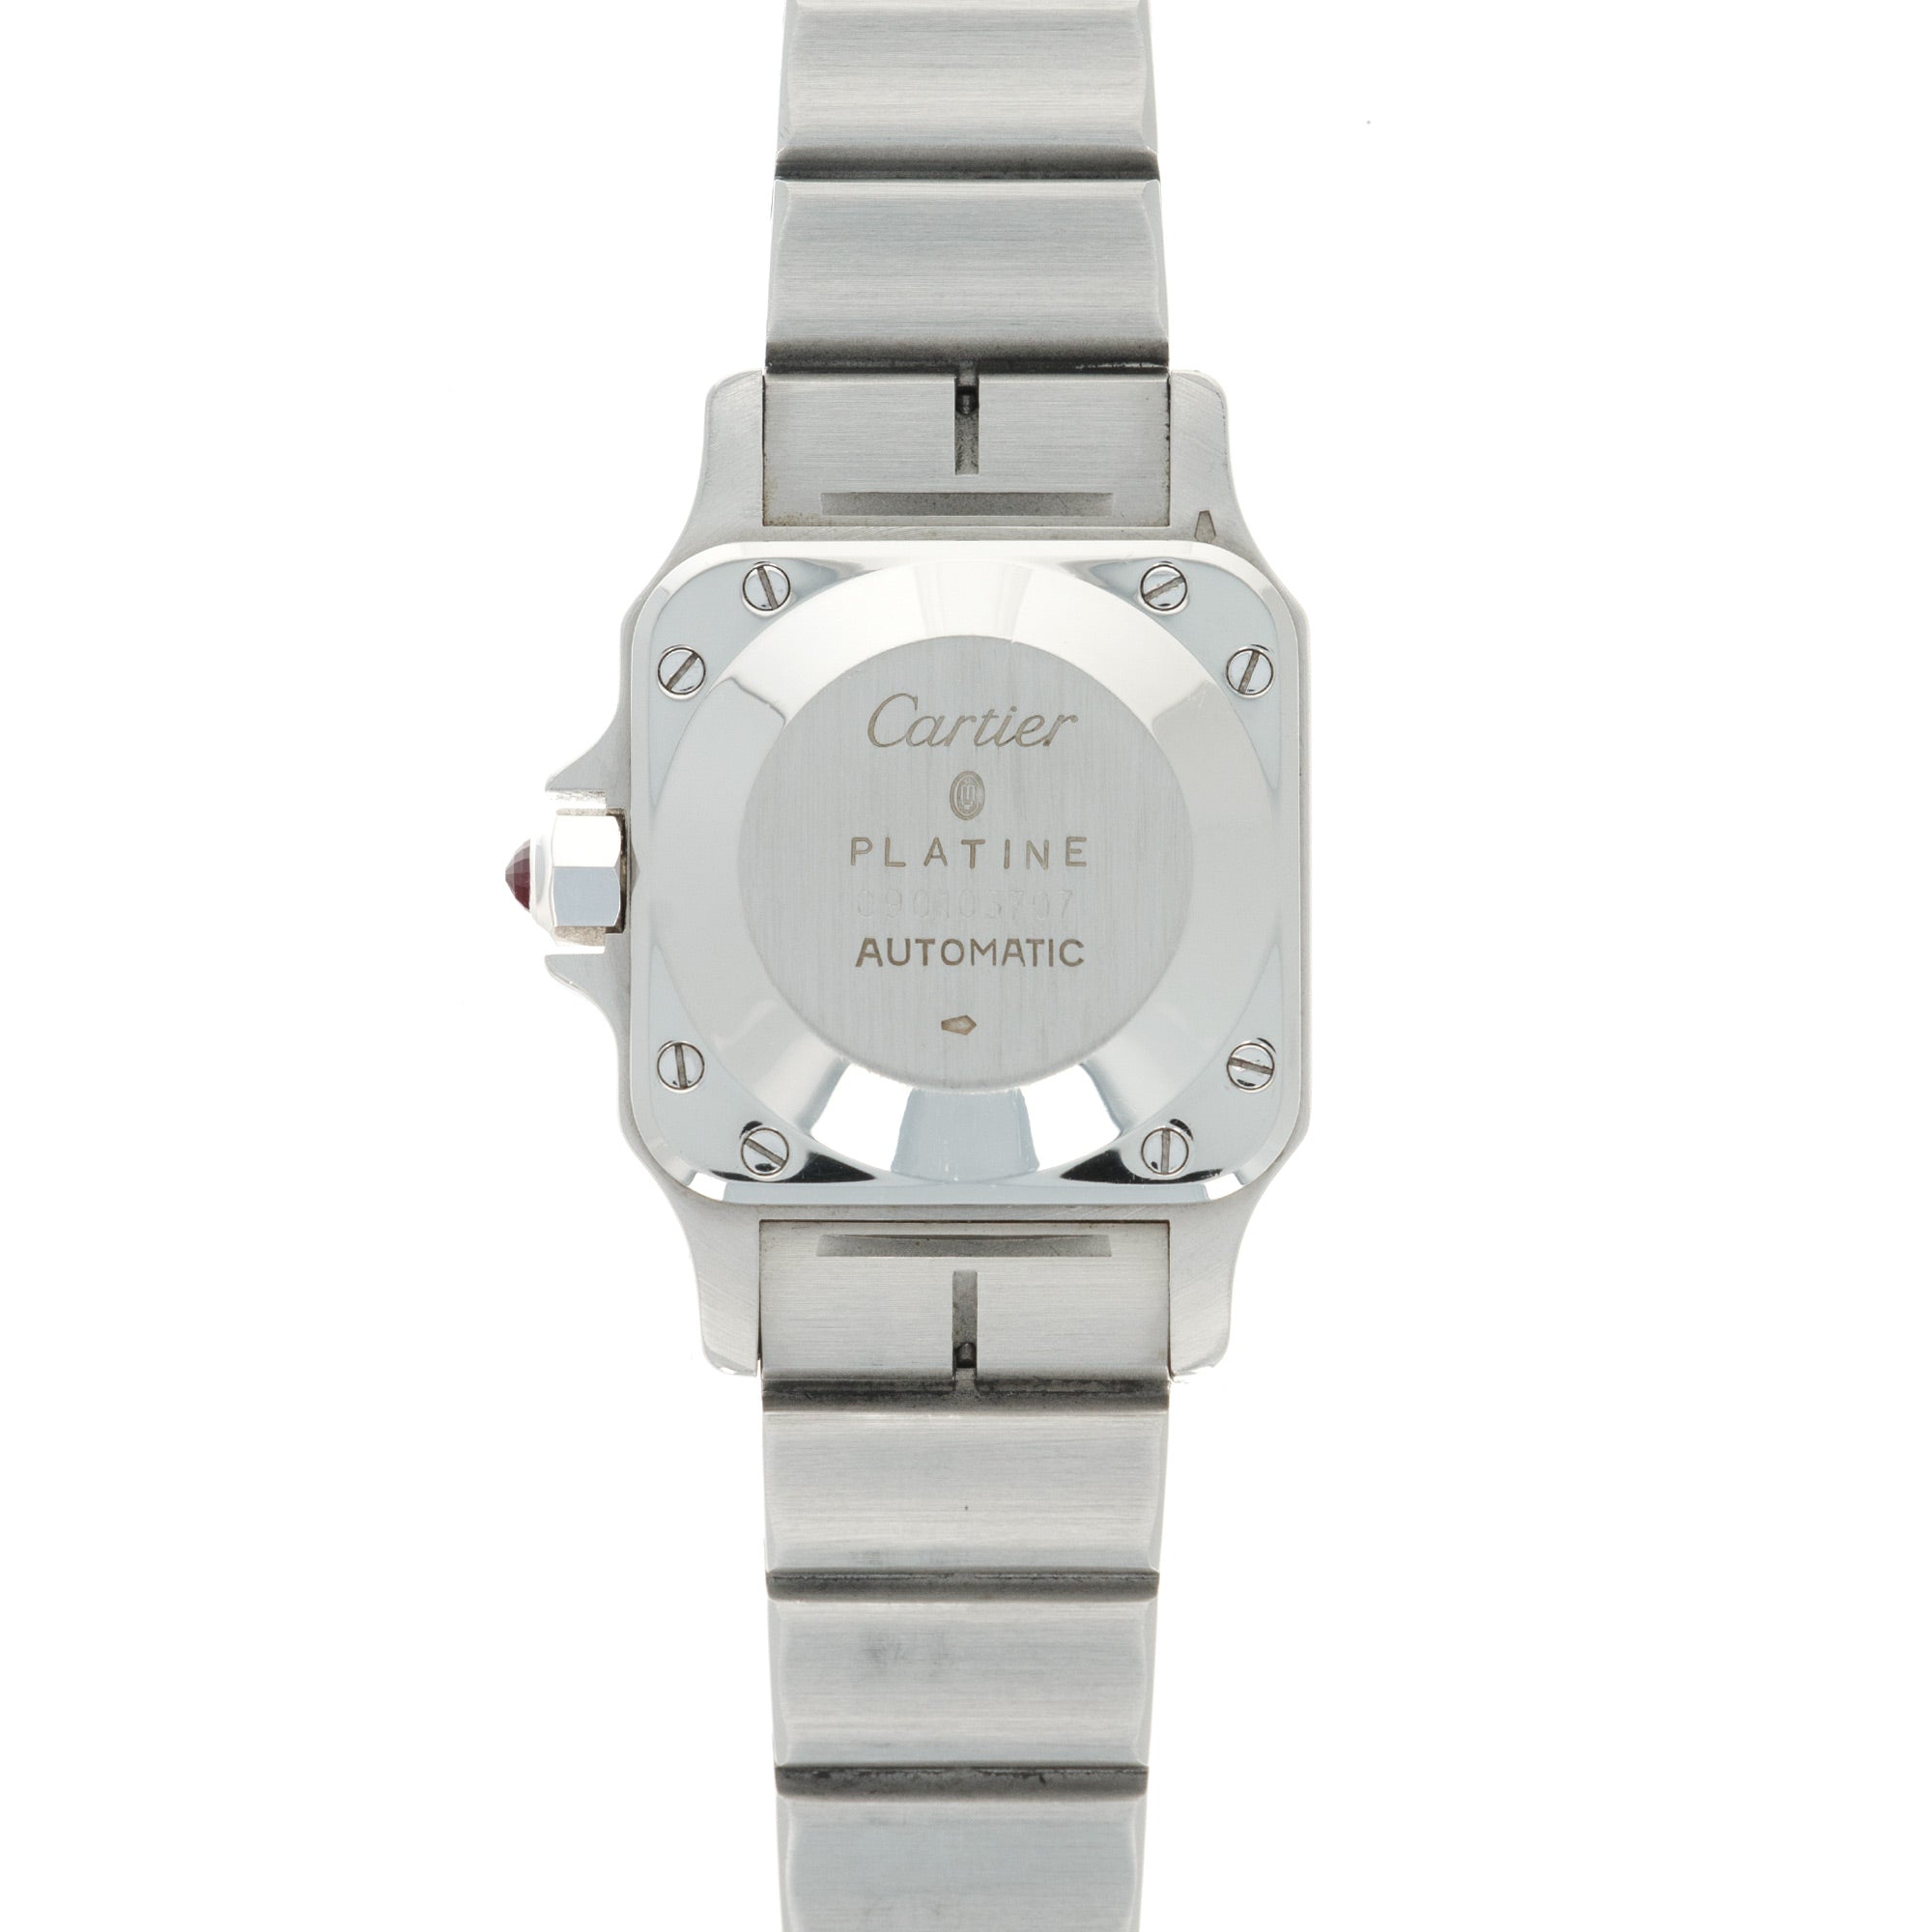 Cartier - Cartier Platinum Santos Automatic Watch, 1979 - The Keystone Watches